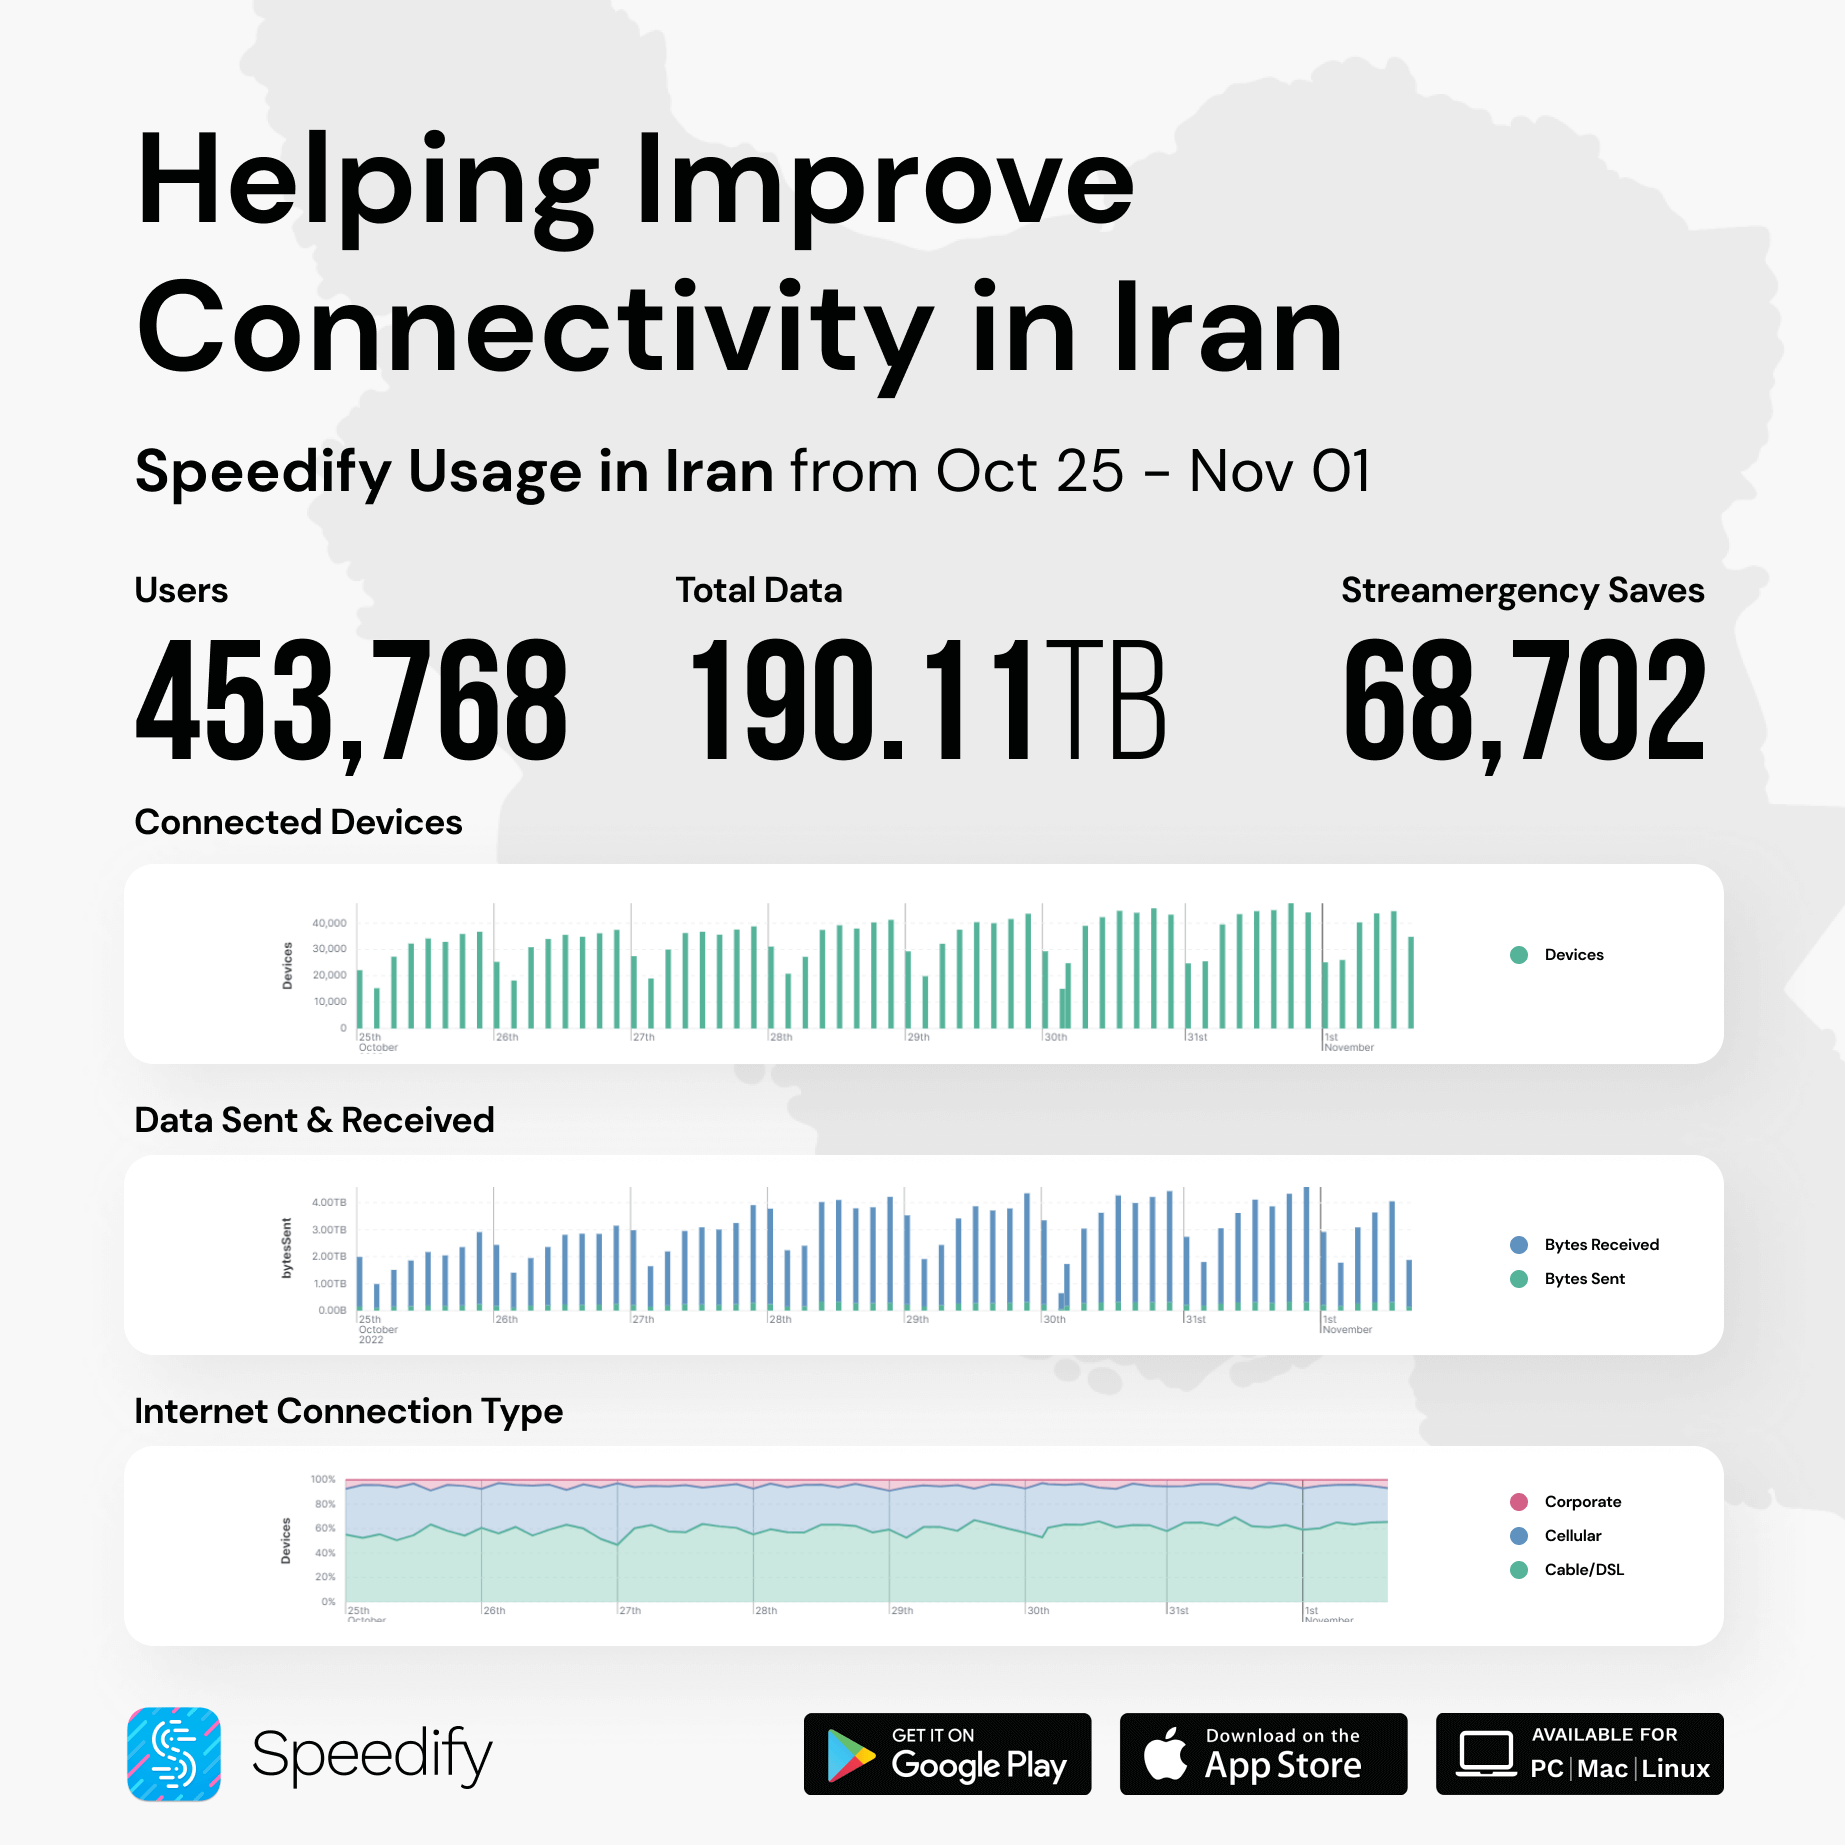 Nov 1 - Iran Internet usage for Speedify users